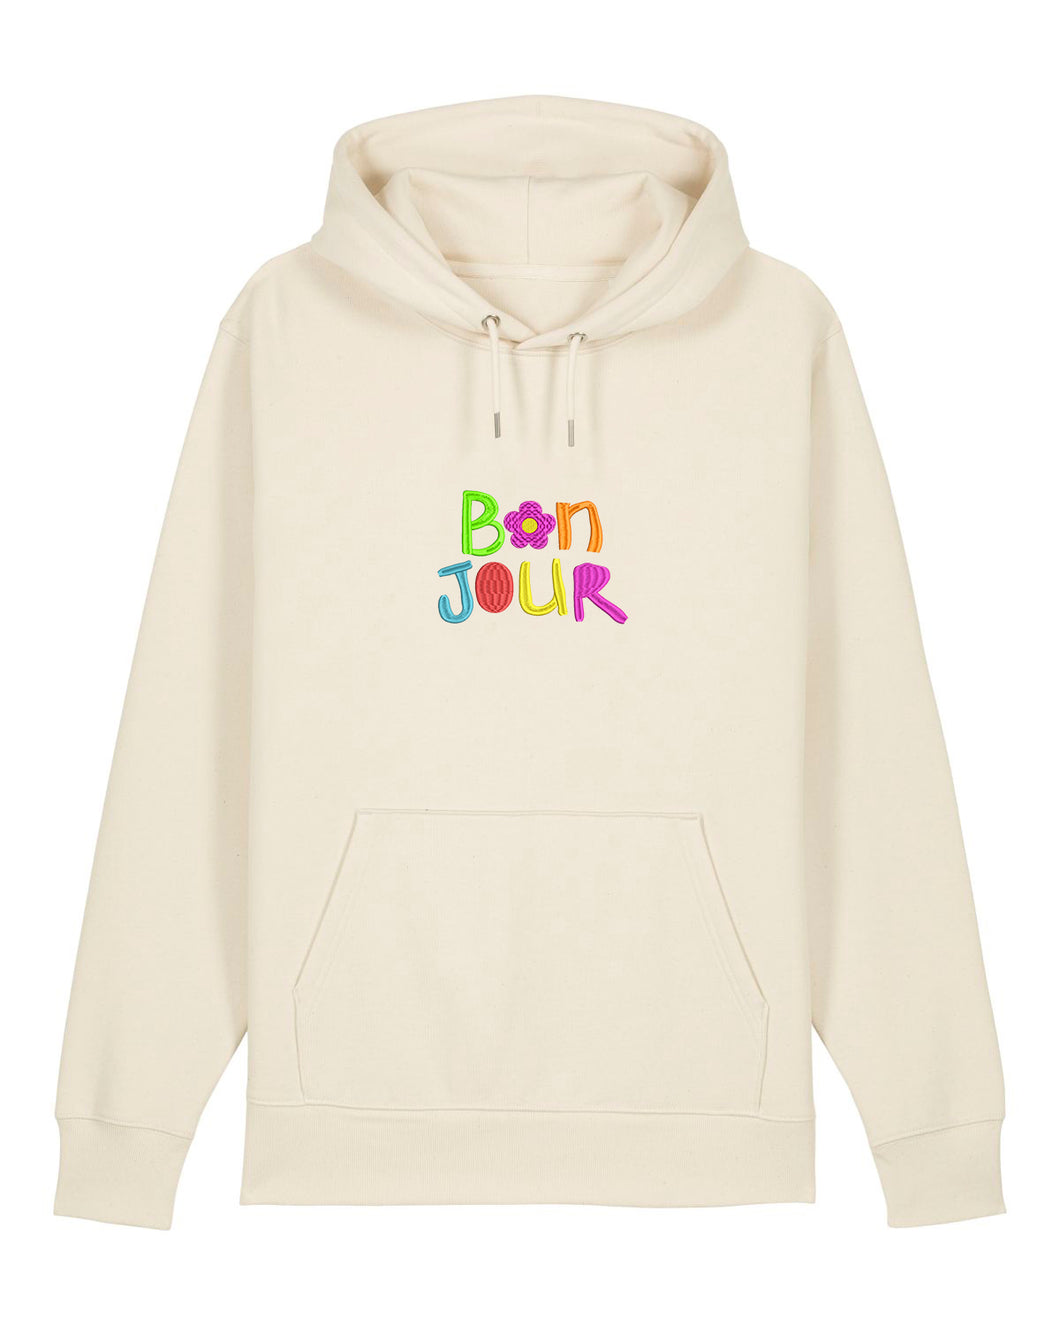 B🌸N JOUR - Embroidered UNISEX hoodie